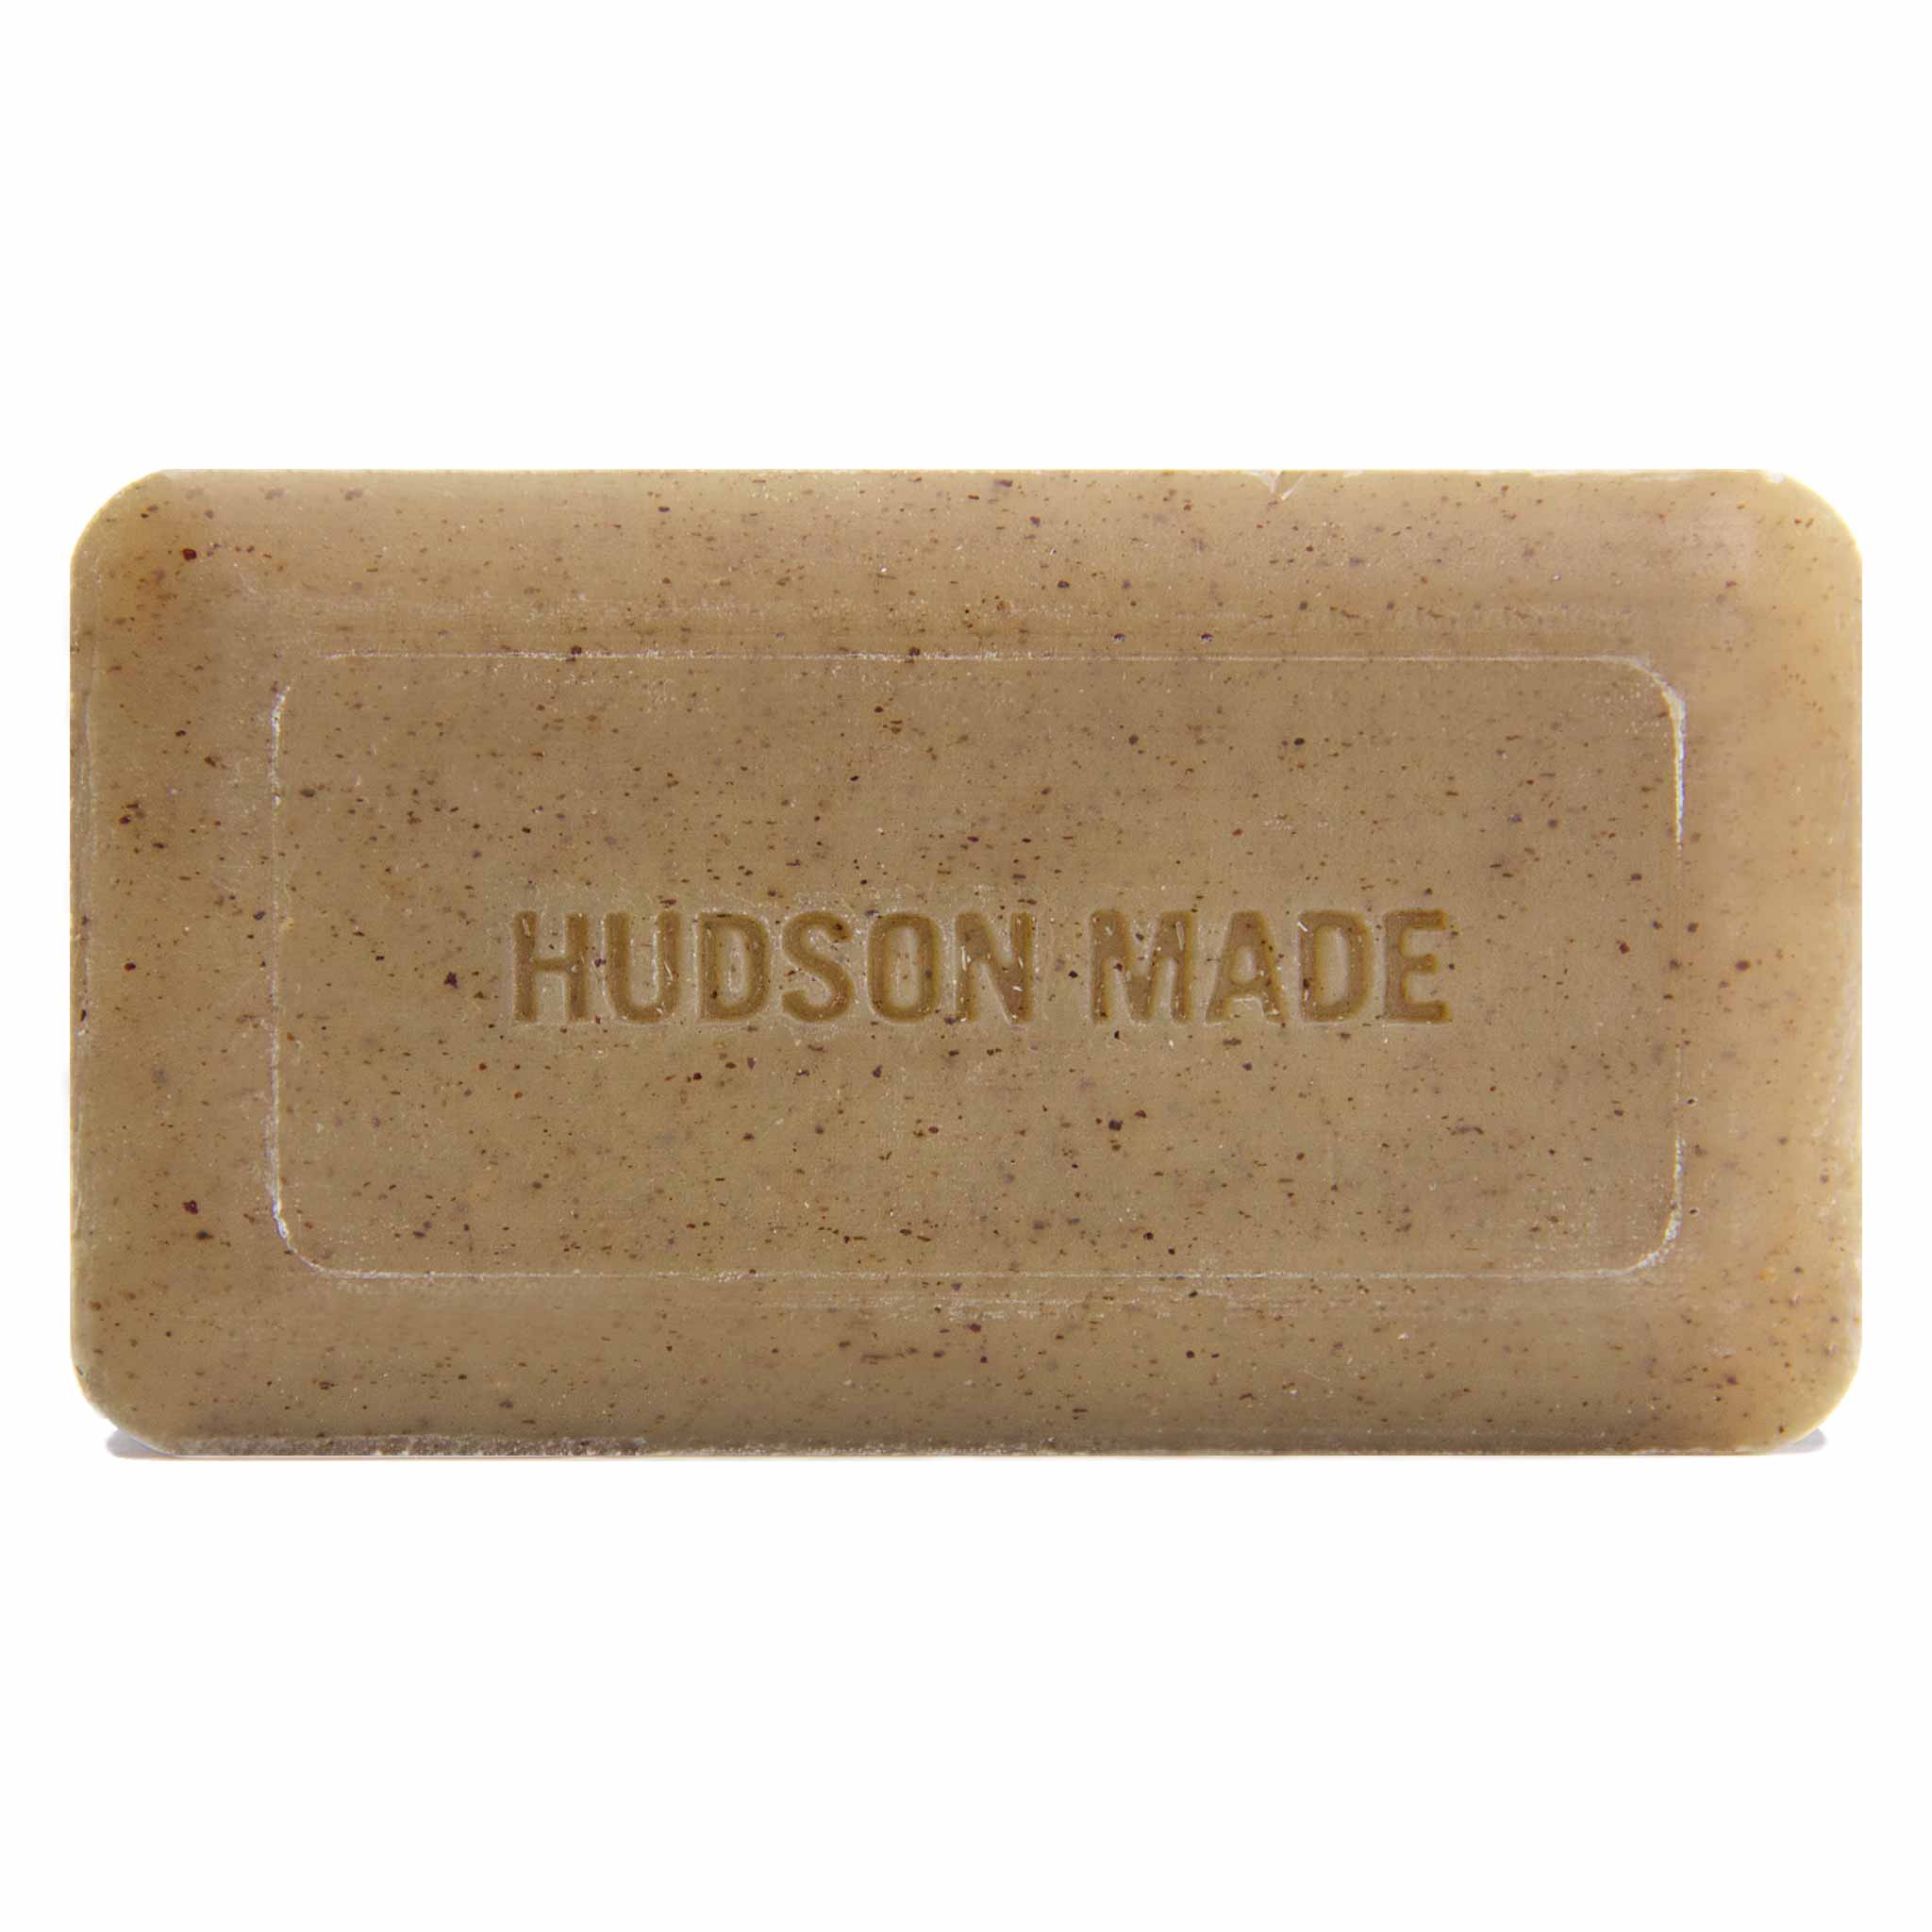 Hudson Made - Morning Shift Body Bar Soap 5.75 oz.